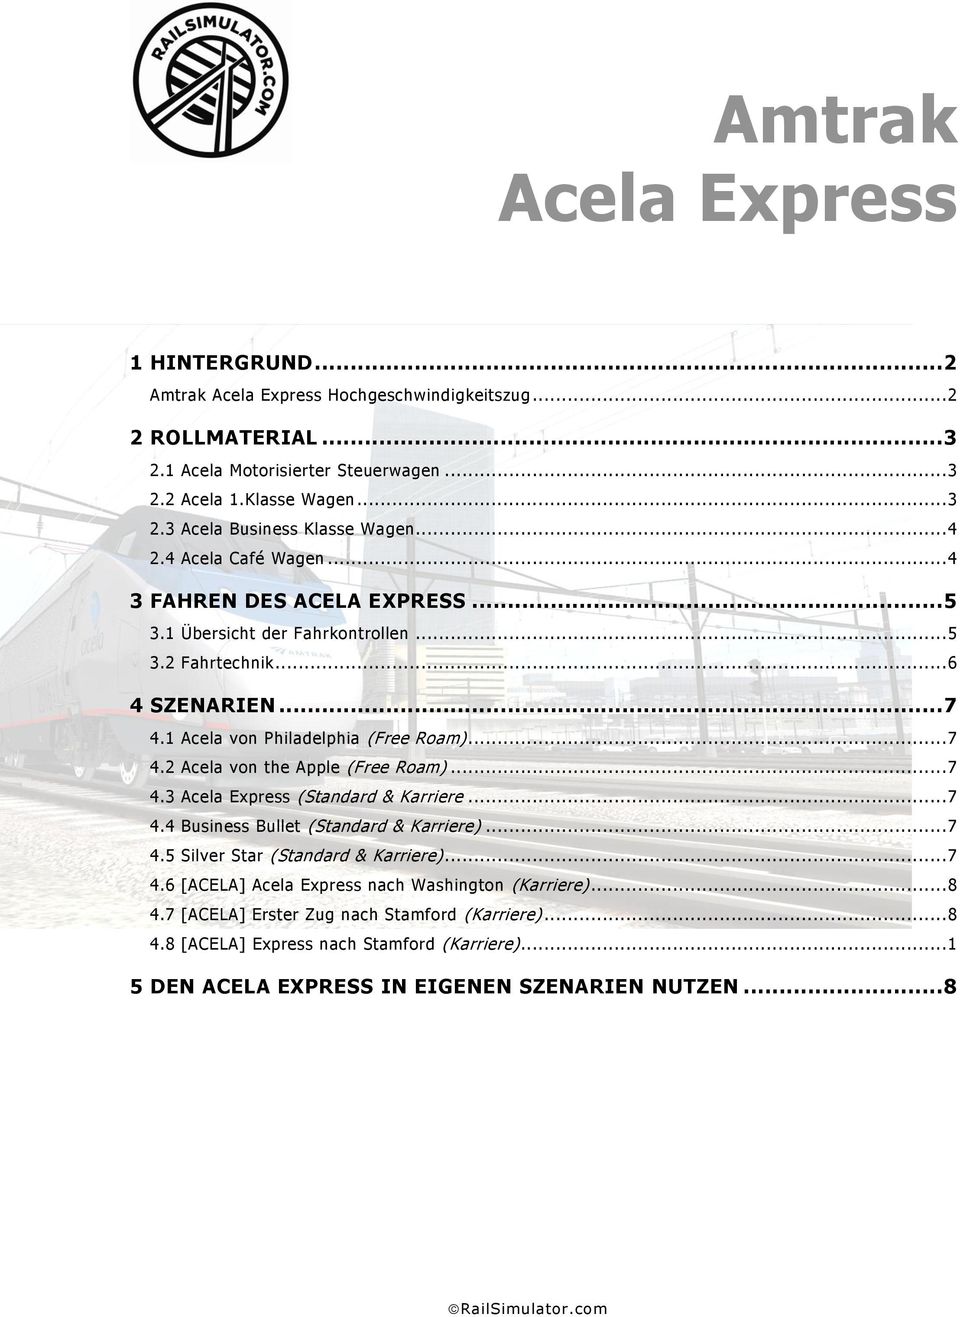 .. 7 4.3 Acela Express (Standard & Karriere... 7 4.4 Business Bullet (Standard & Karriere)... 7 4.5 Silver Star (Standard & Karriere)... 7 4.6 [ACELA] Acela Express nach Washington (Karriere)... 8 4.